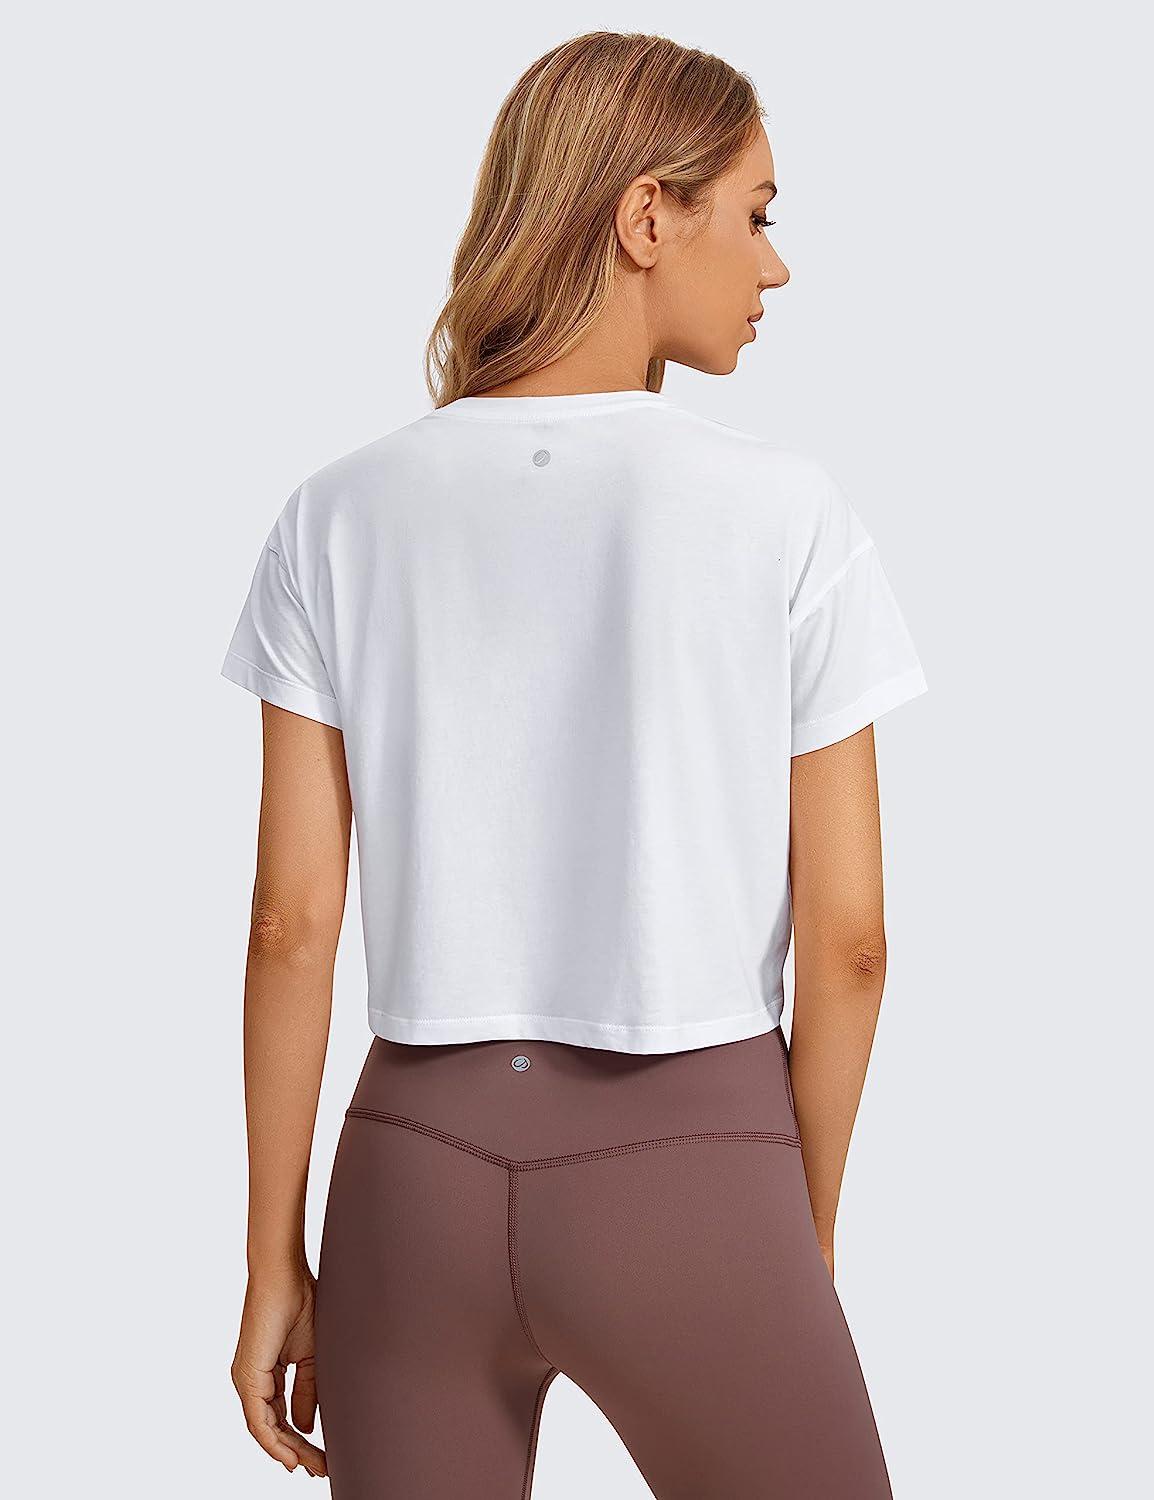 CRZ YOGA Women's Pima Cotton Workout Short Sleeve Shirts Loose Crop Tops  Athletic Gym Shirt Casual Cropped T-Shirt Medium White